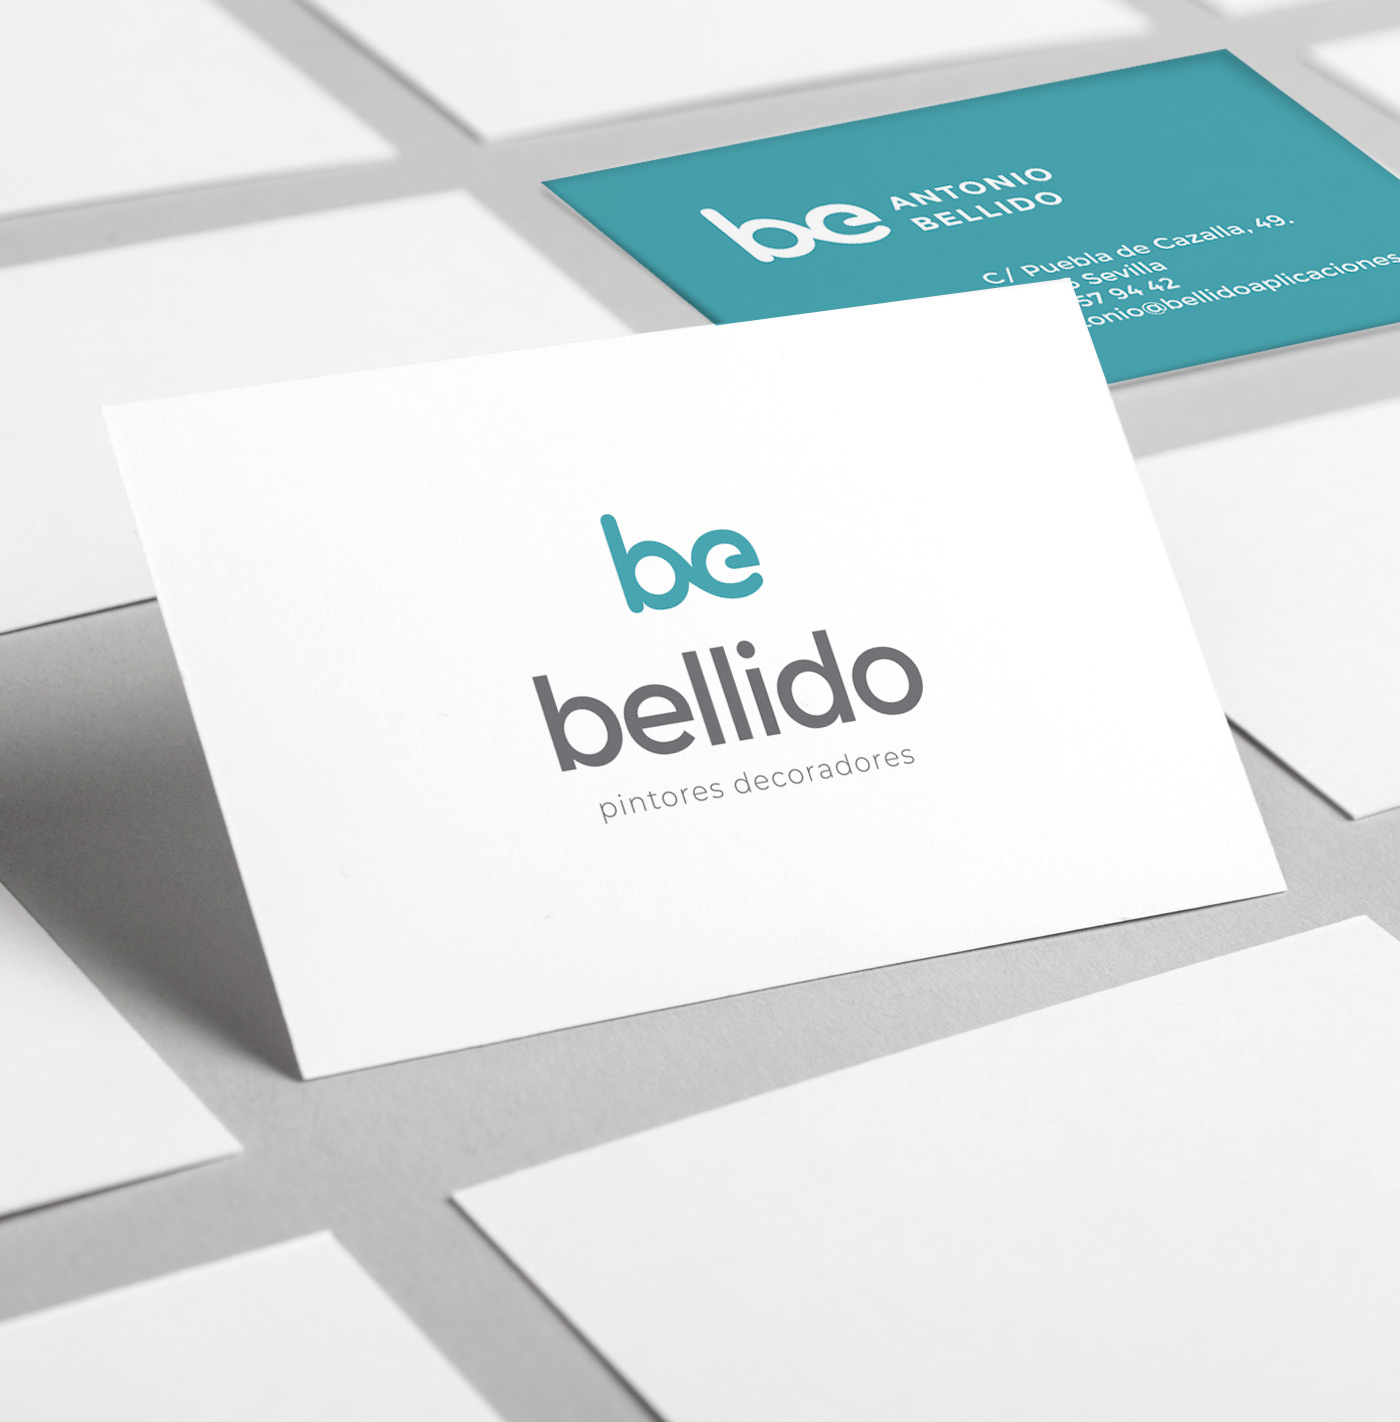 bellido-logo-1.jpg